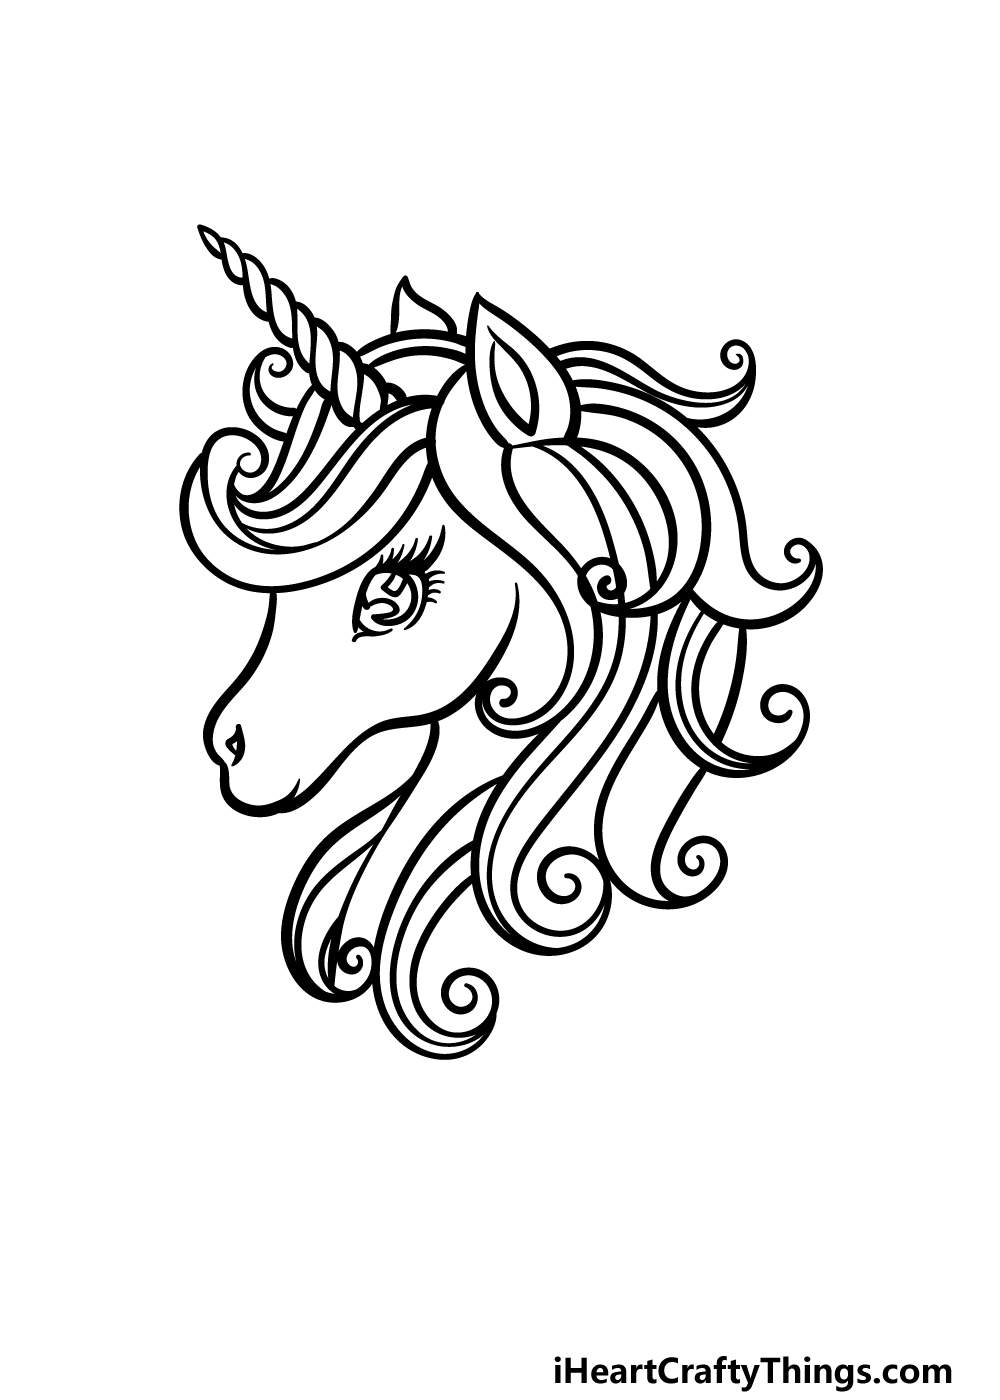 A Rainbow Unicorn Drawing by JoshuaTheGreat - DragoArt-saigonsouth.com.vn